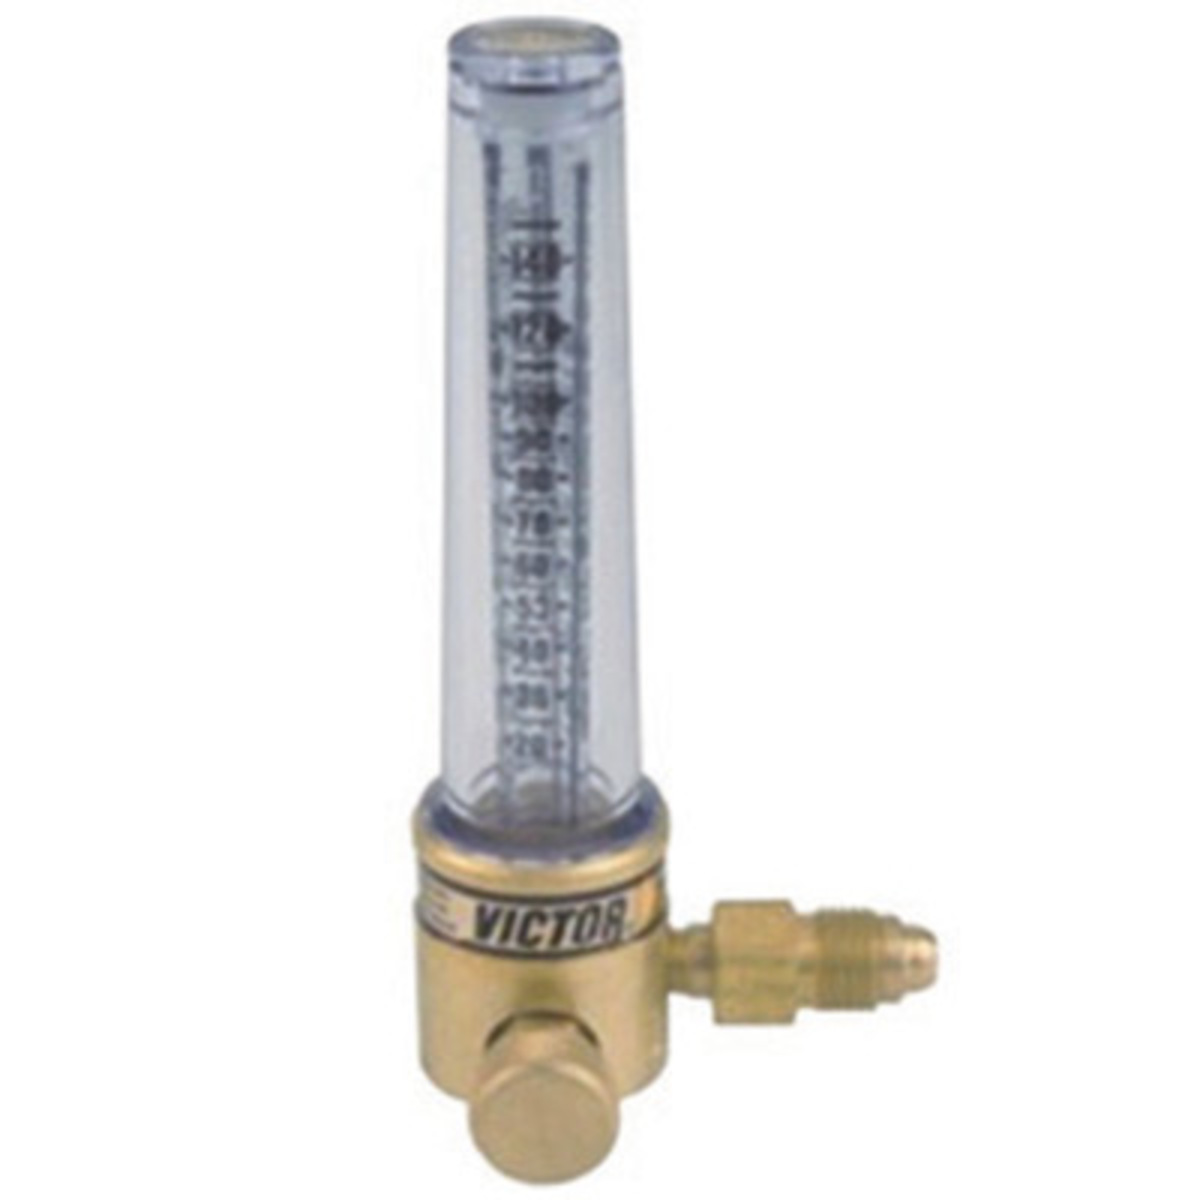 VICTOR Thermal Dynamics HRF 1480-580 Series Flowmeter Regulator 80 PSI Argon for sale online 